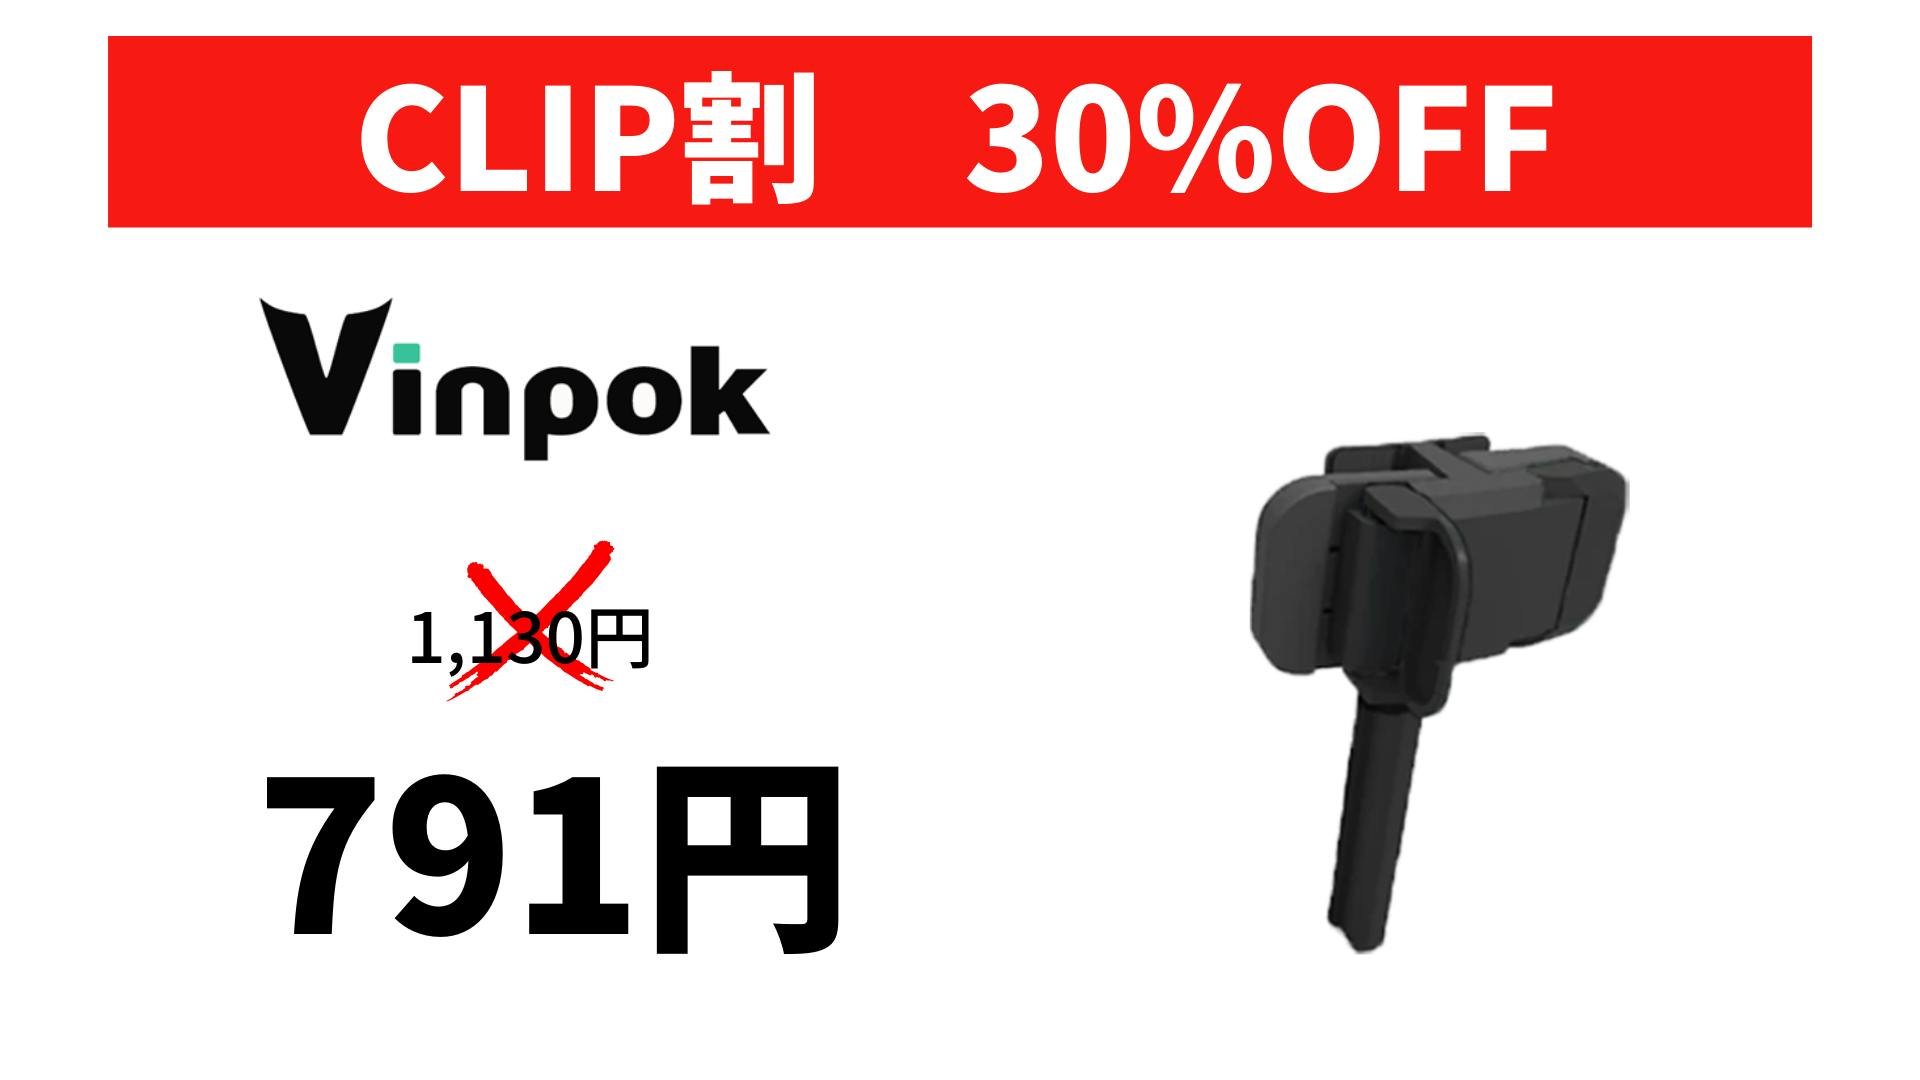 Vinpok Split 超軽量タッチパネルモバイルモニター FHD15.6